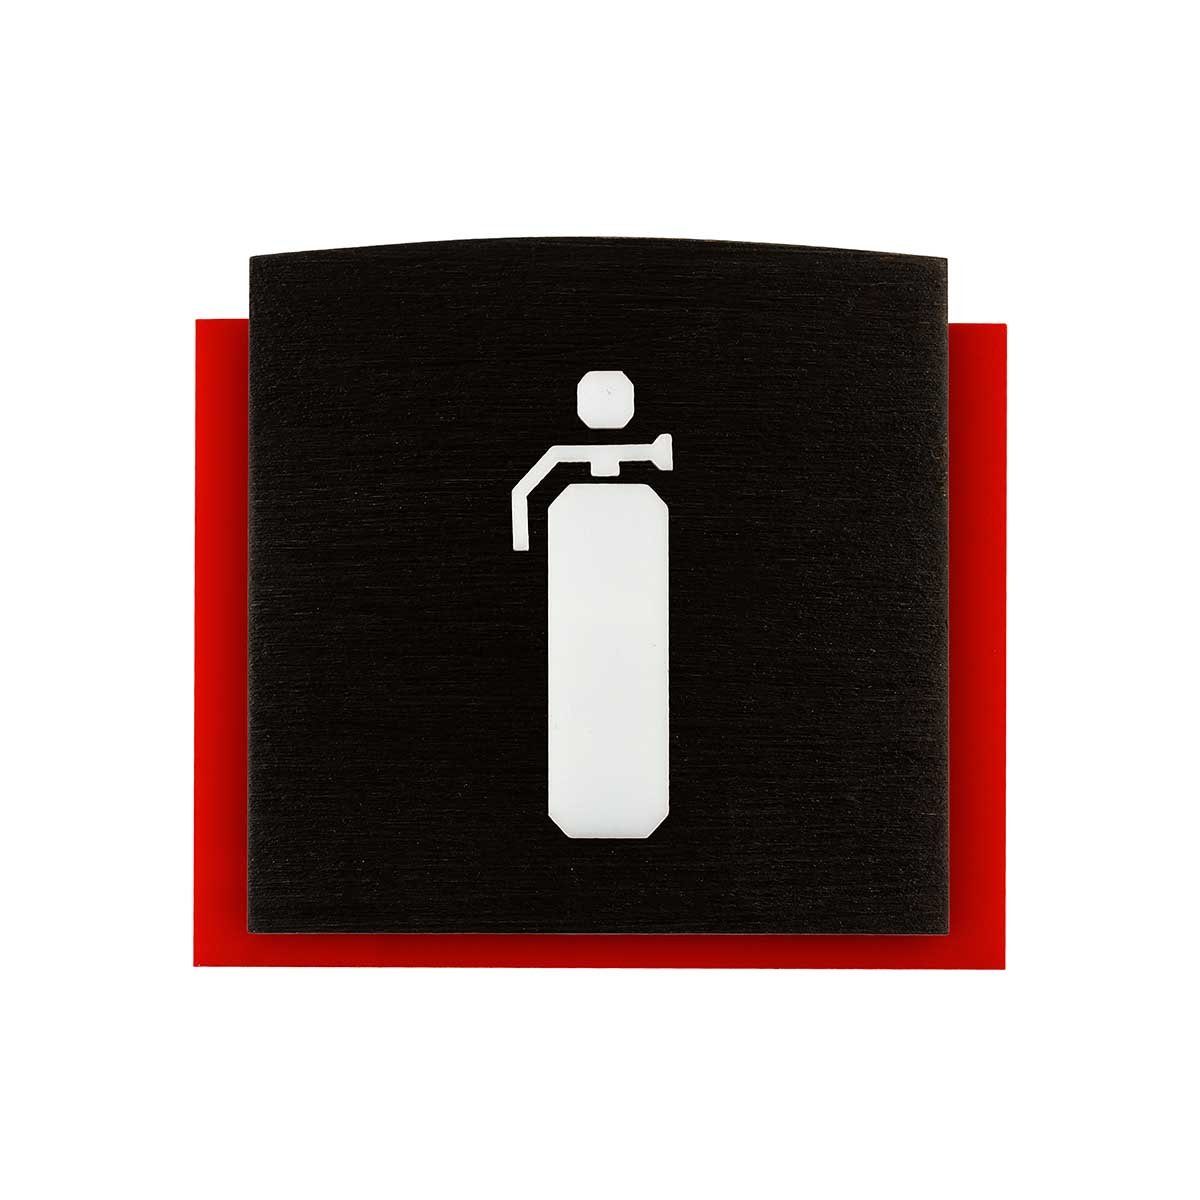 Wood Extinguisher Fire Safety Sign for Office Information signs Dark Wenge Bsign